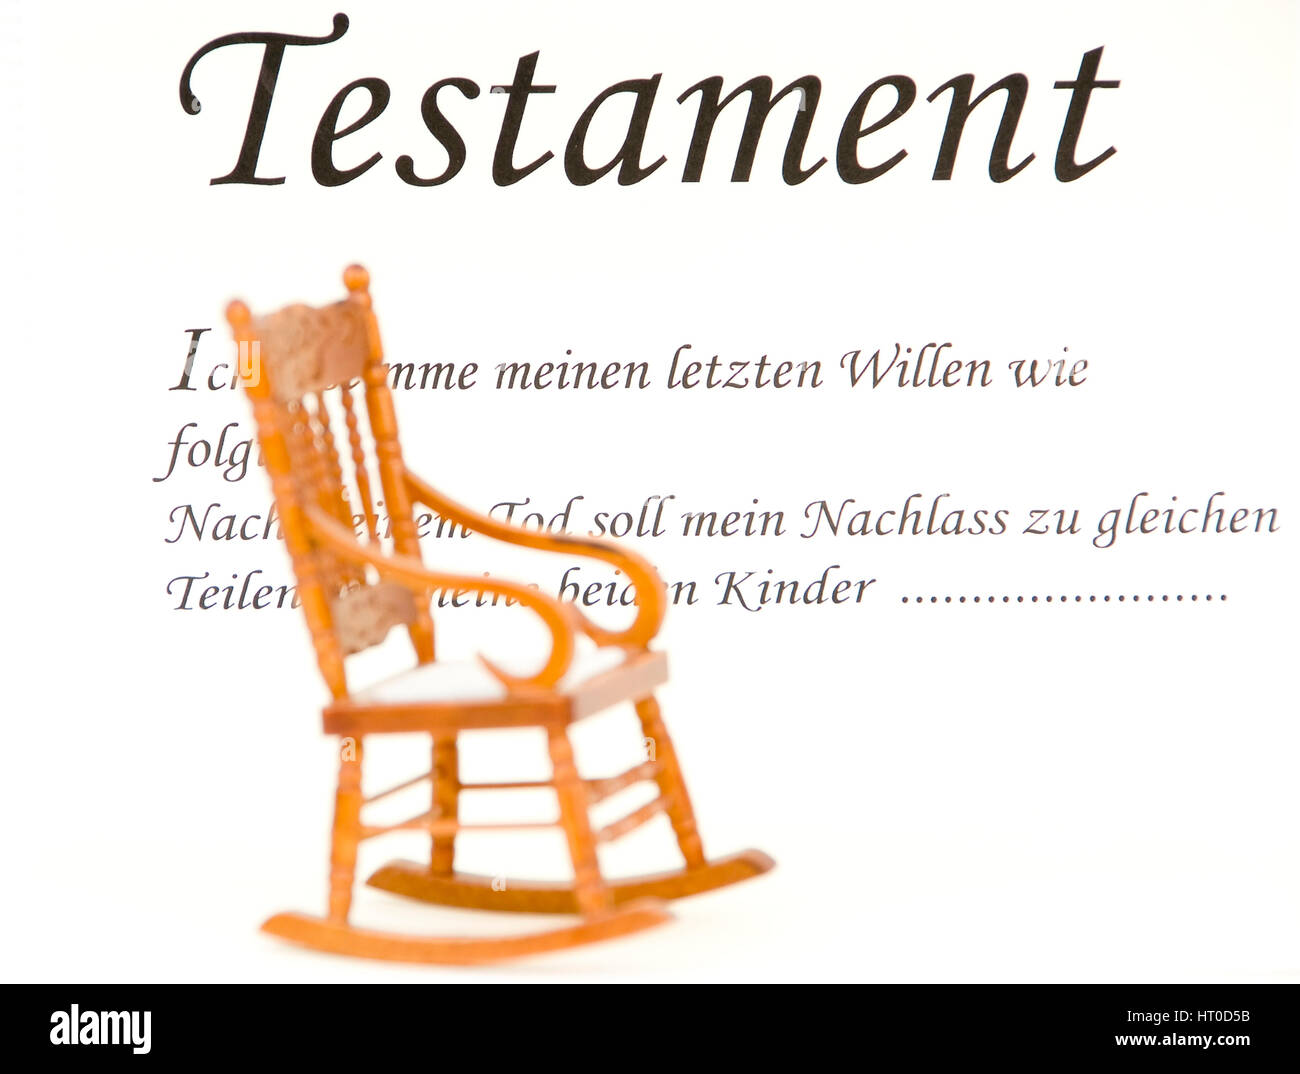 Symbolbild Testament - symbolic for testament Stock Photo